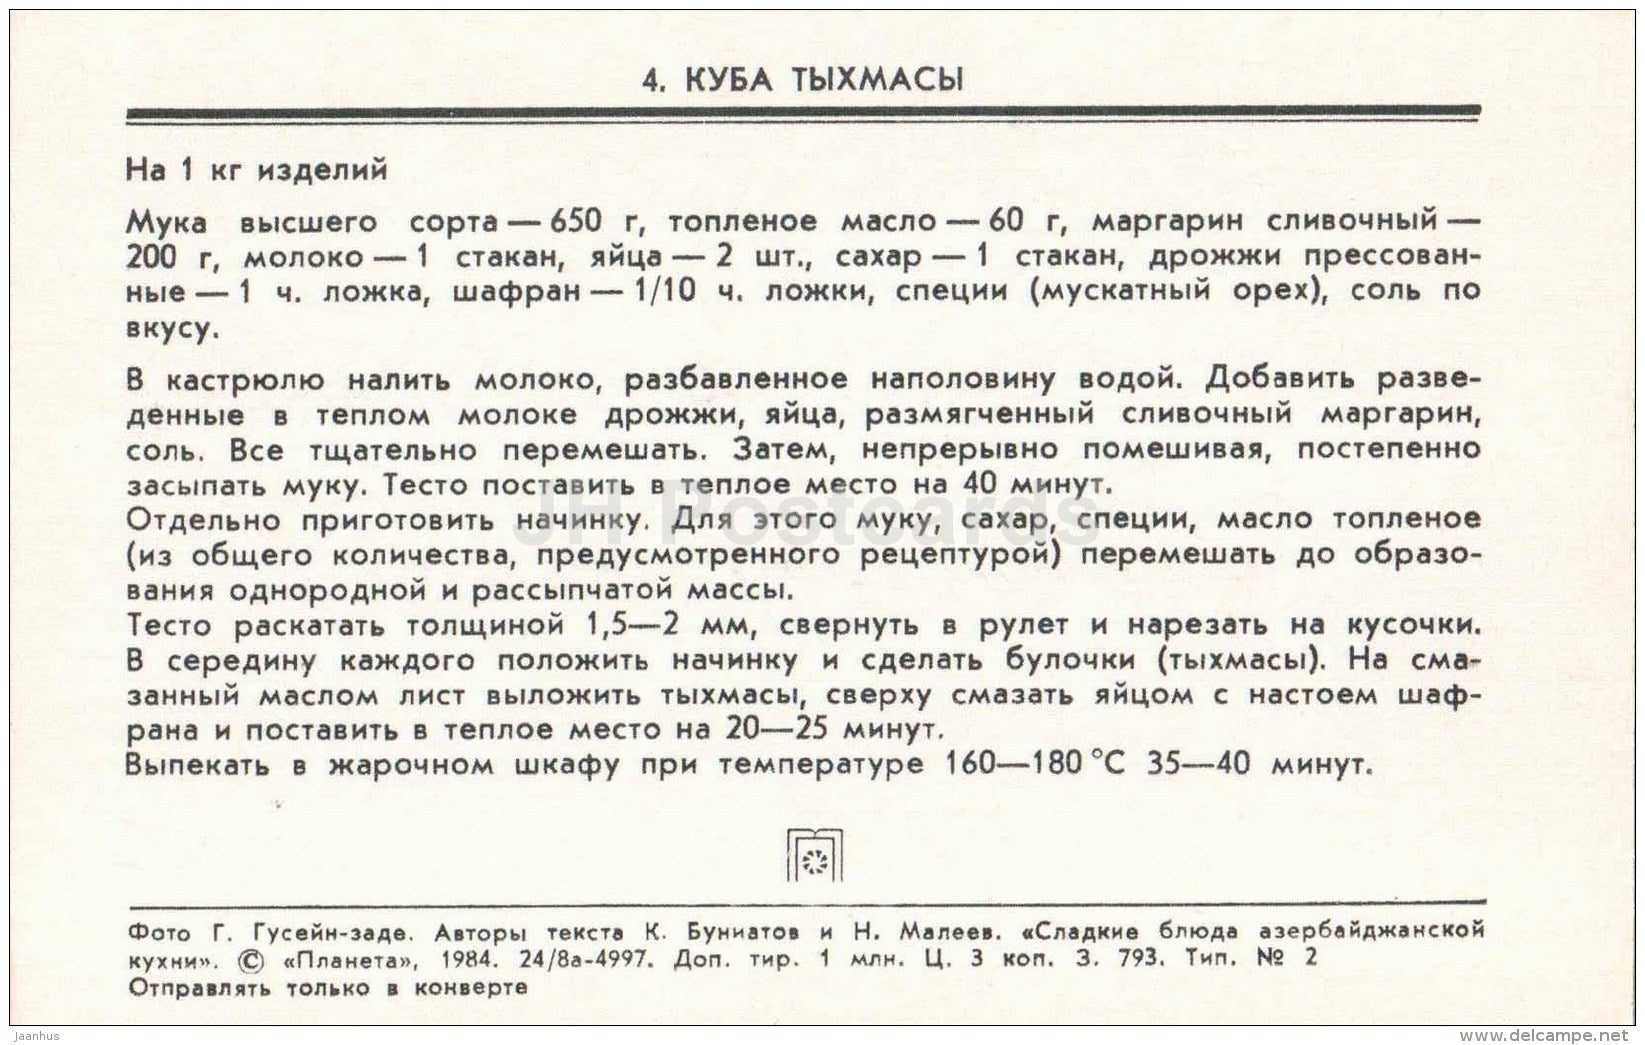 Quba Tykhmasy - poppy seed - dishes - Azerbaijan dessert - cuisine - 1984 - Russia USSR - unused - JH Postcards